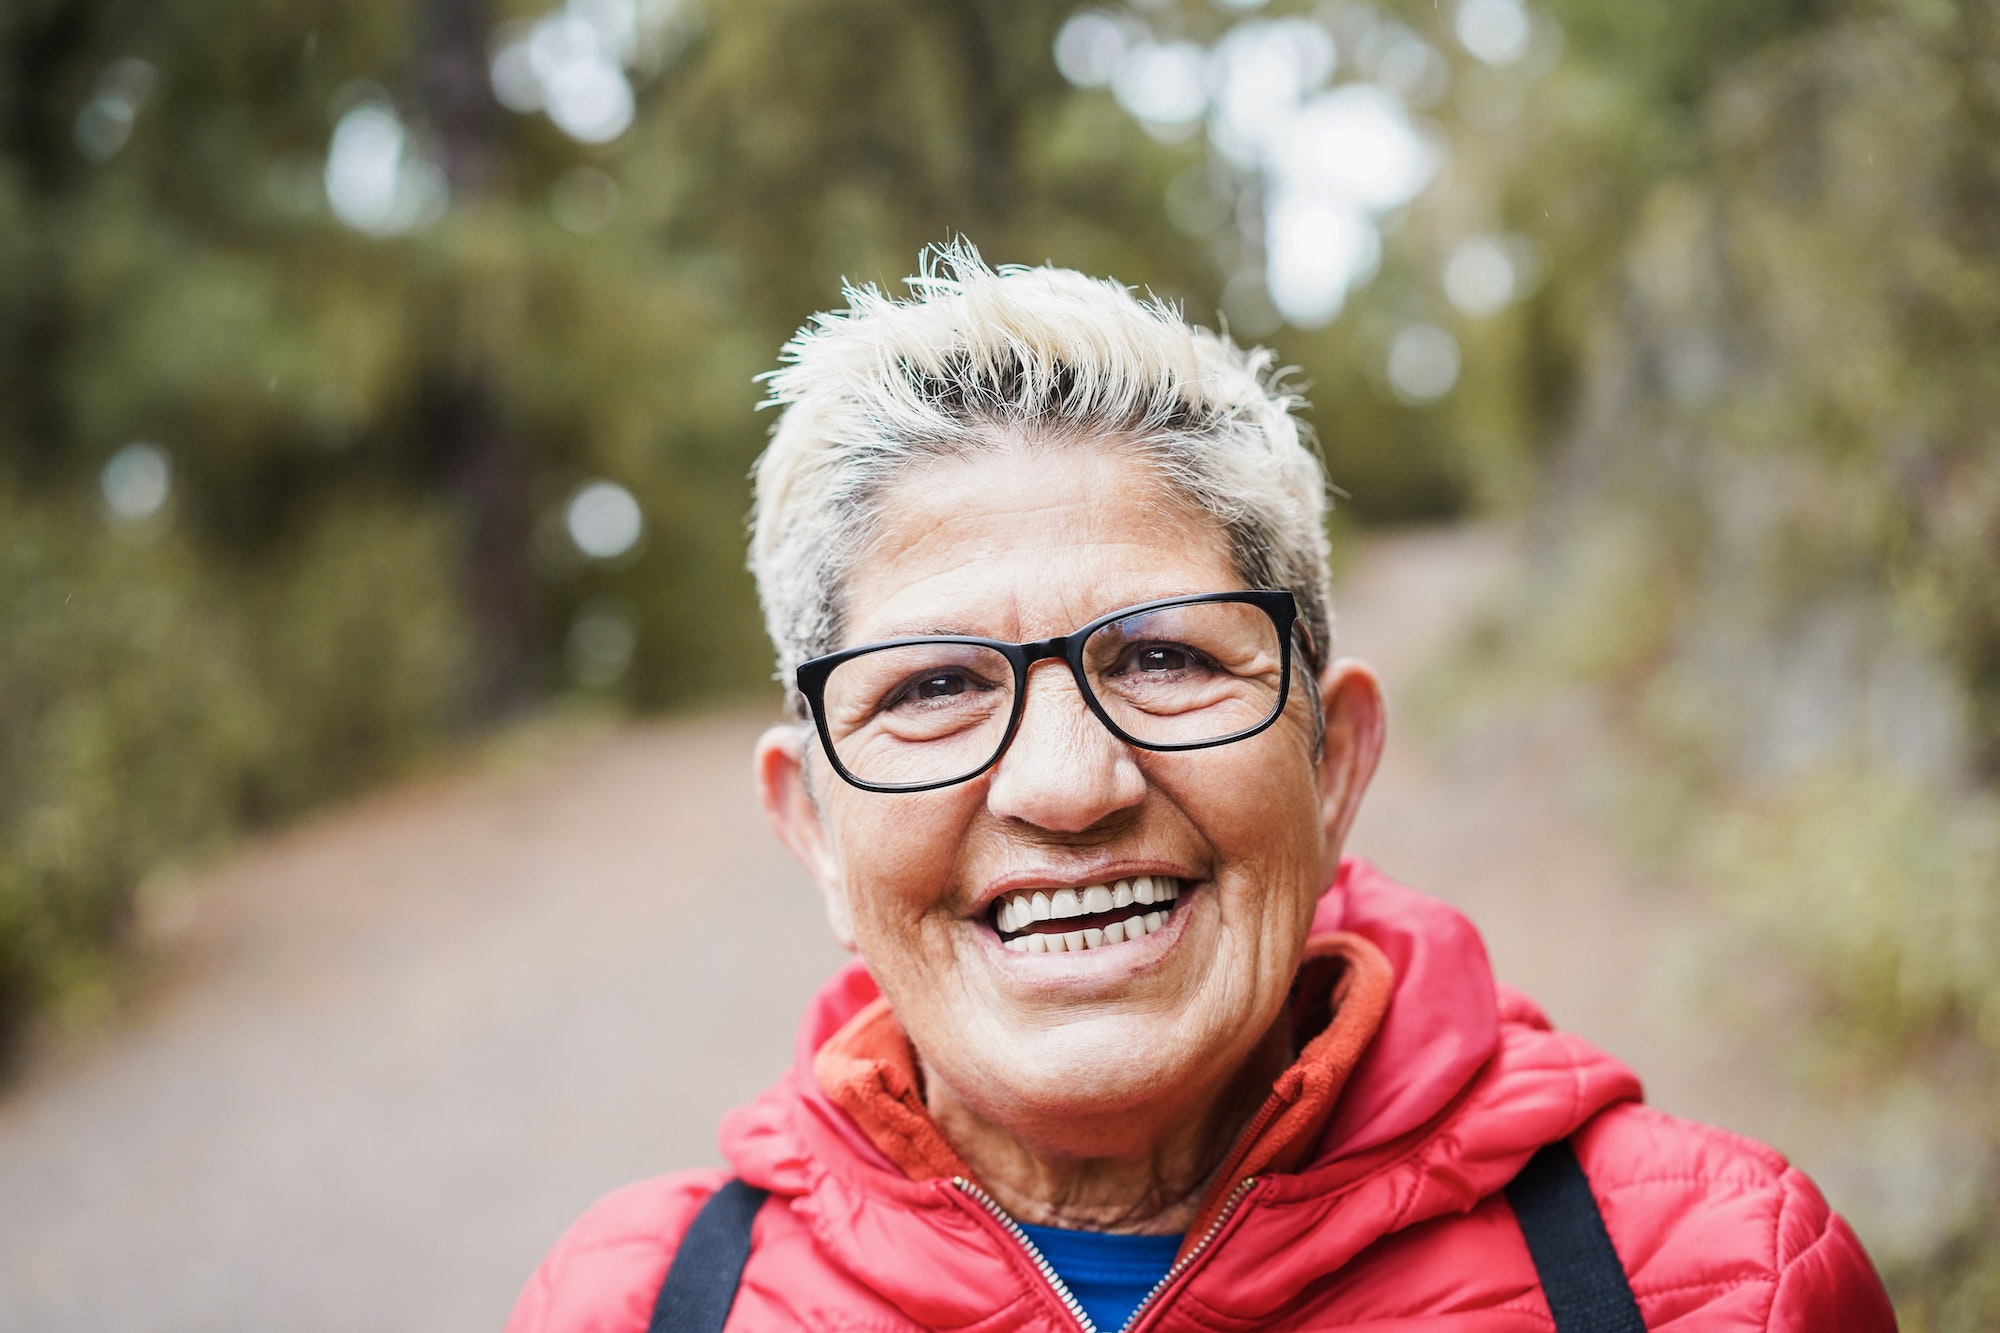 Portrait of senior hispanic woman having fun during trekking day in mountain forest - Focus on face